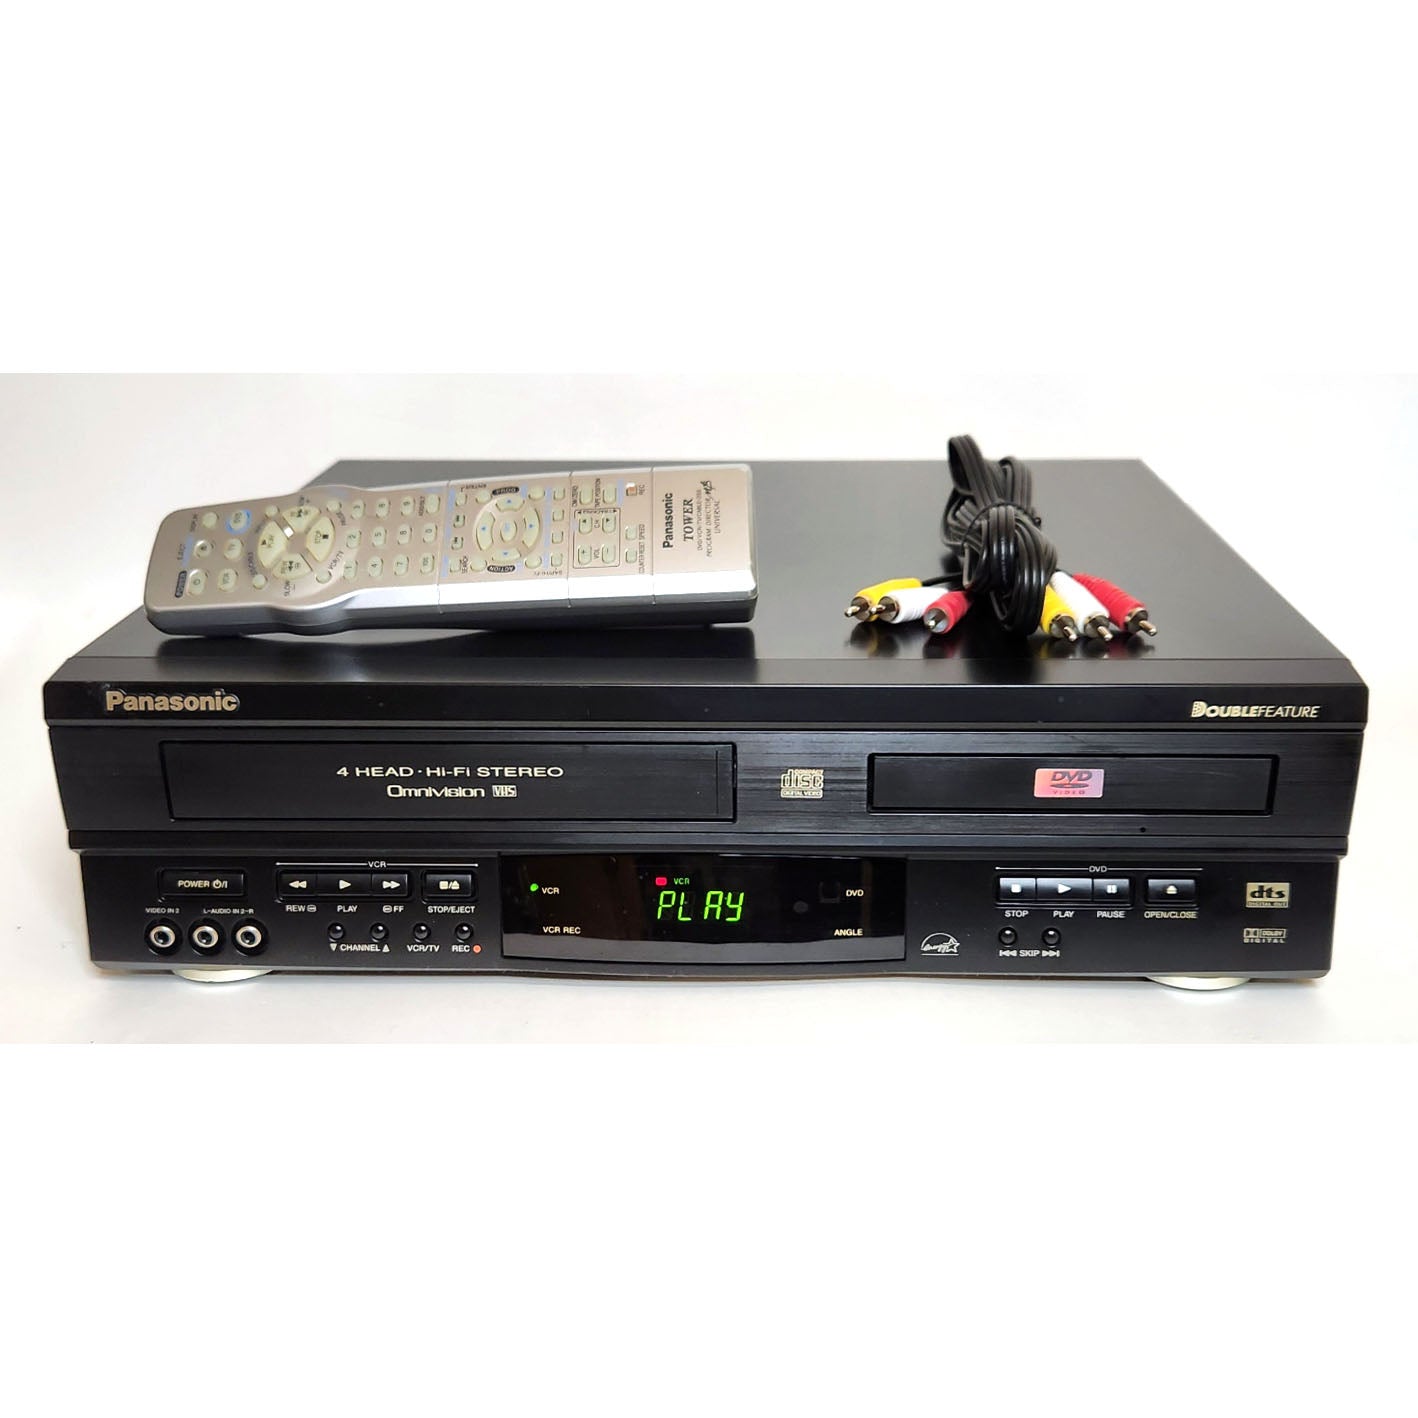 Panasonic PV-D4732 Omnivision VCR/DVD Player Combo